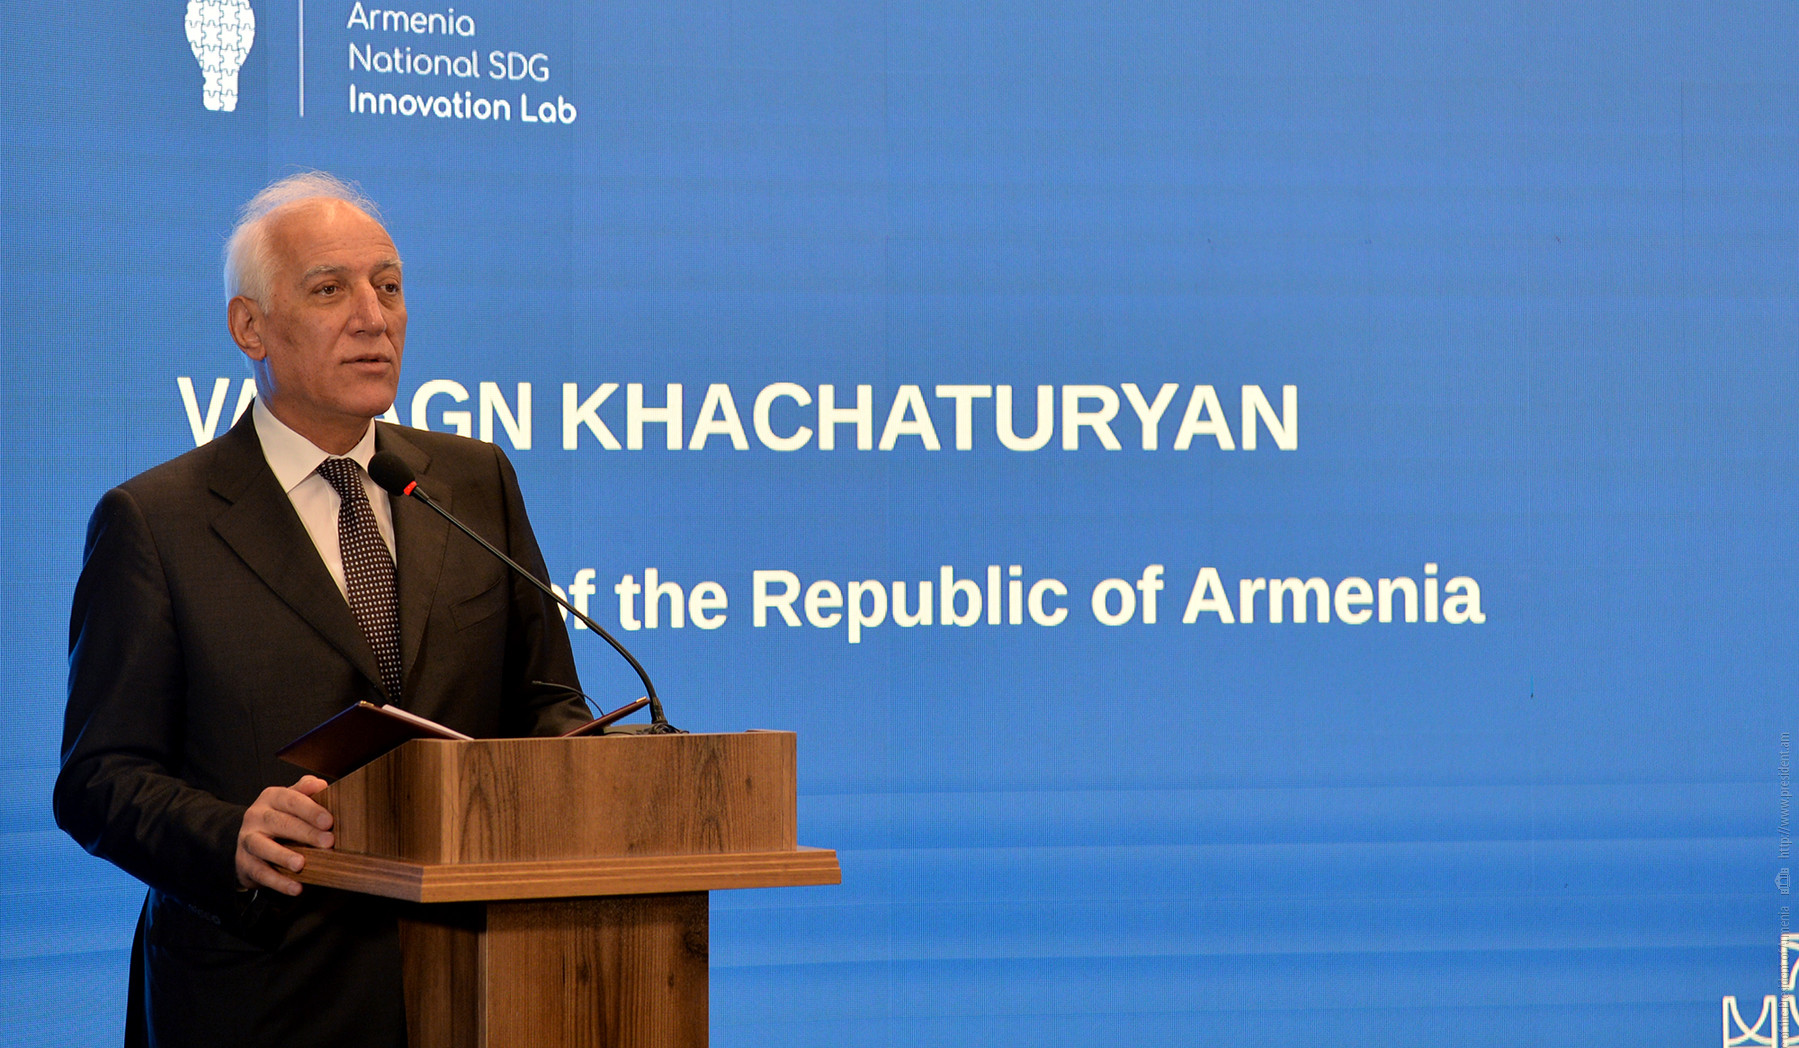 President Vahagn Khachaturyan participated in forum organized by SDG Innovation Lab of UN Development Programme in Armenia